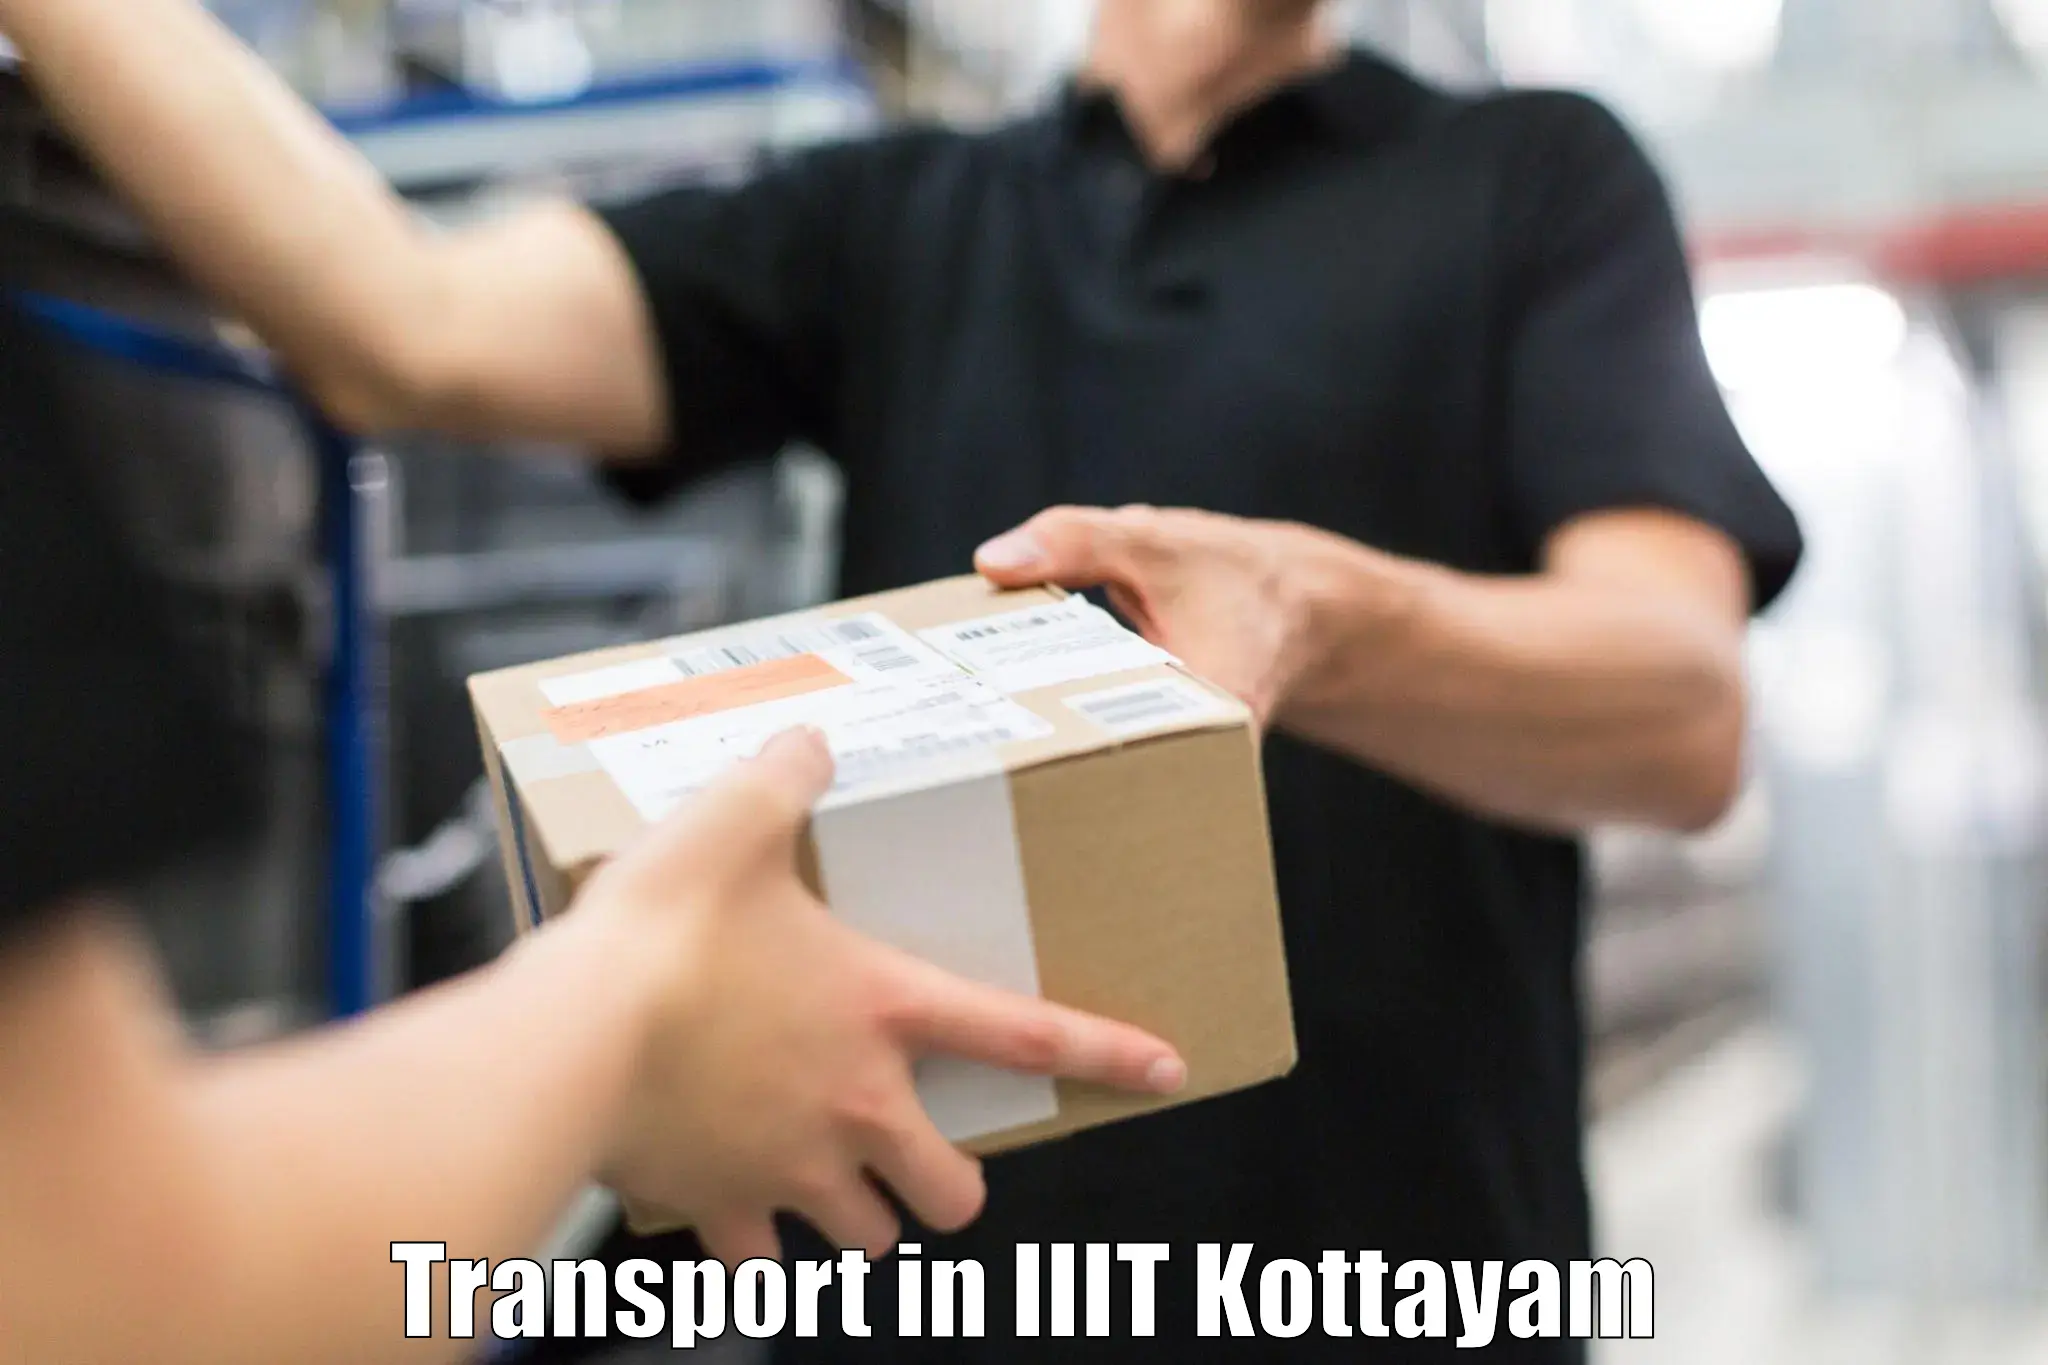 Express transport services in IIIT Kottayam